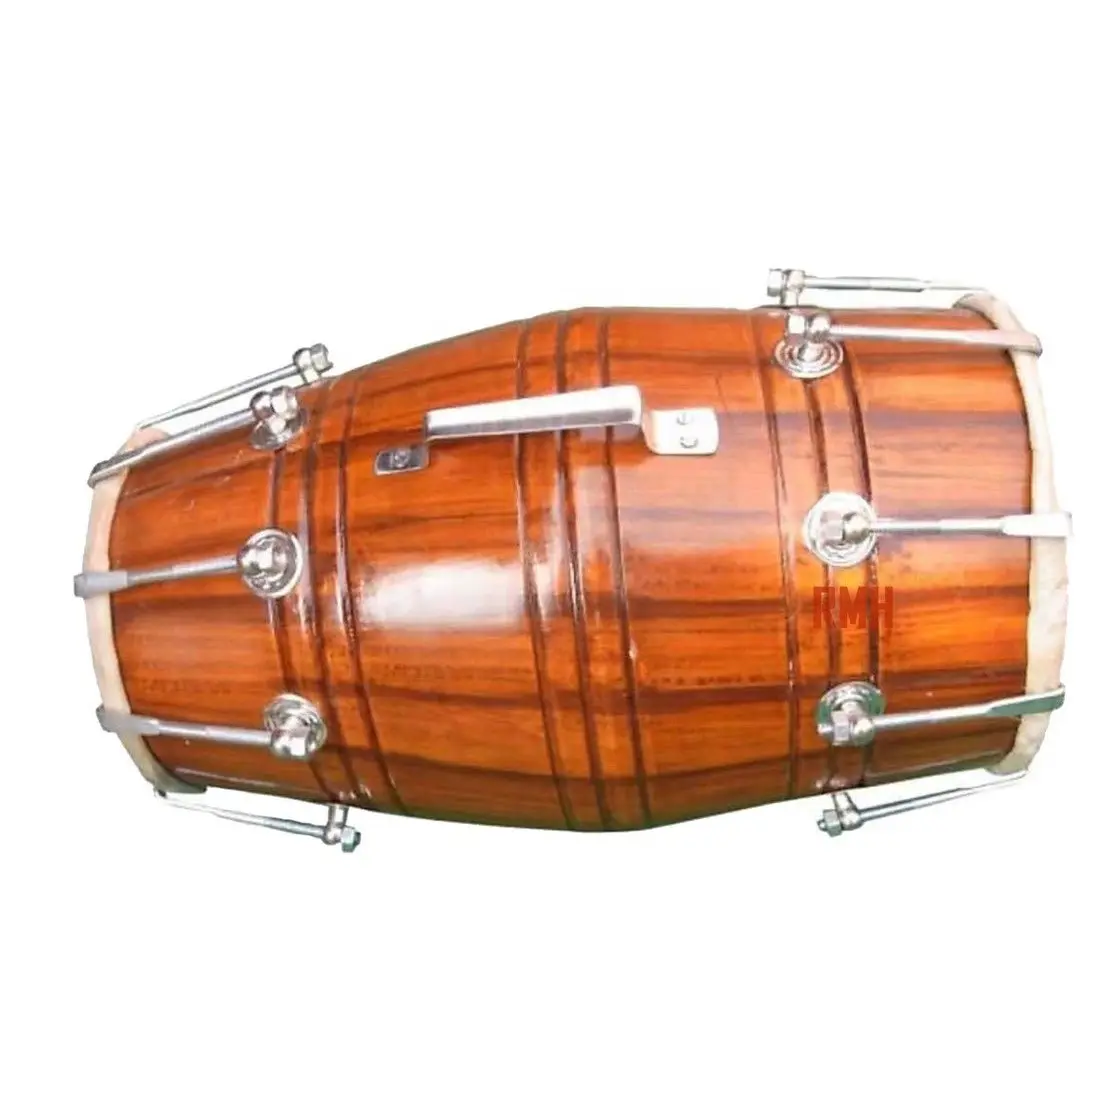 Dhol bhgra Kirtan musikal diukir warisan kayu Dholak Indian buatan tangan kayu Dholki drum musik kulit domba Harga India